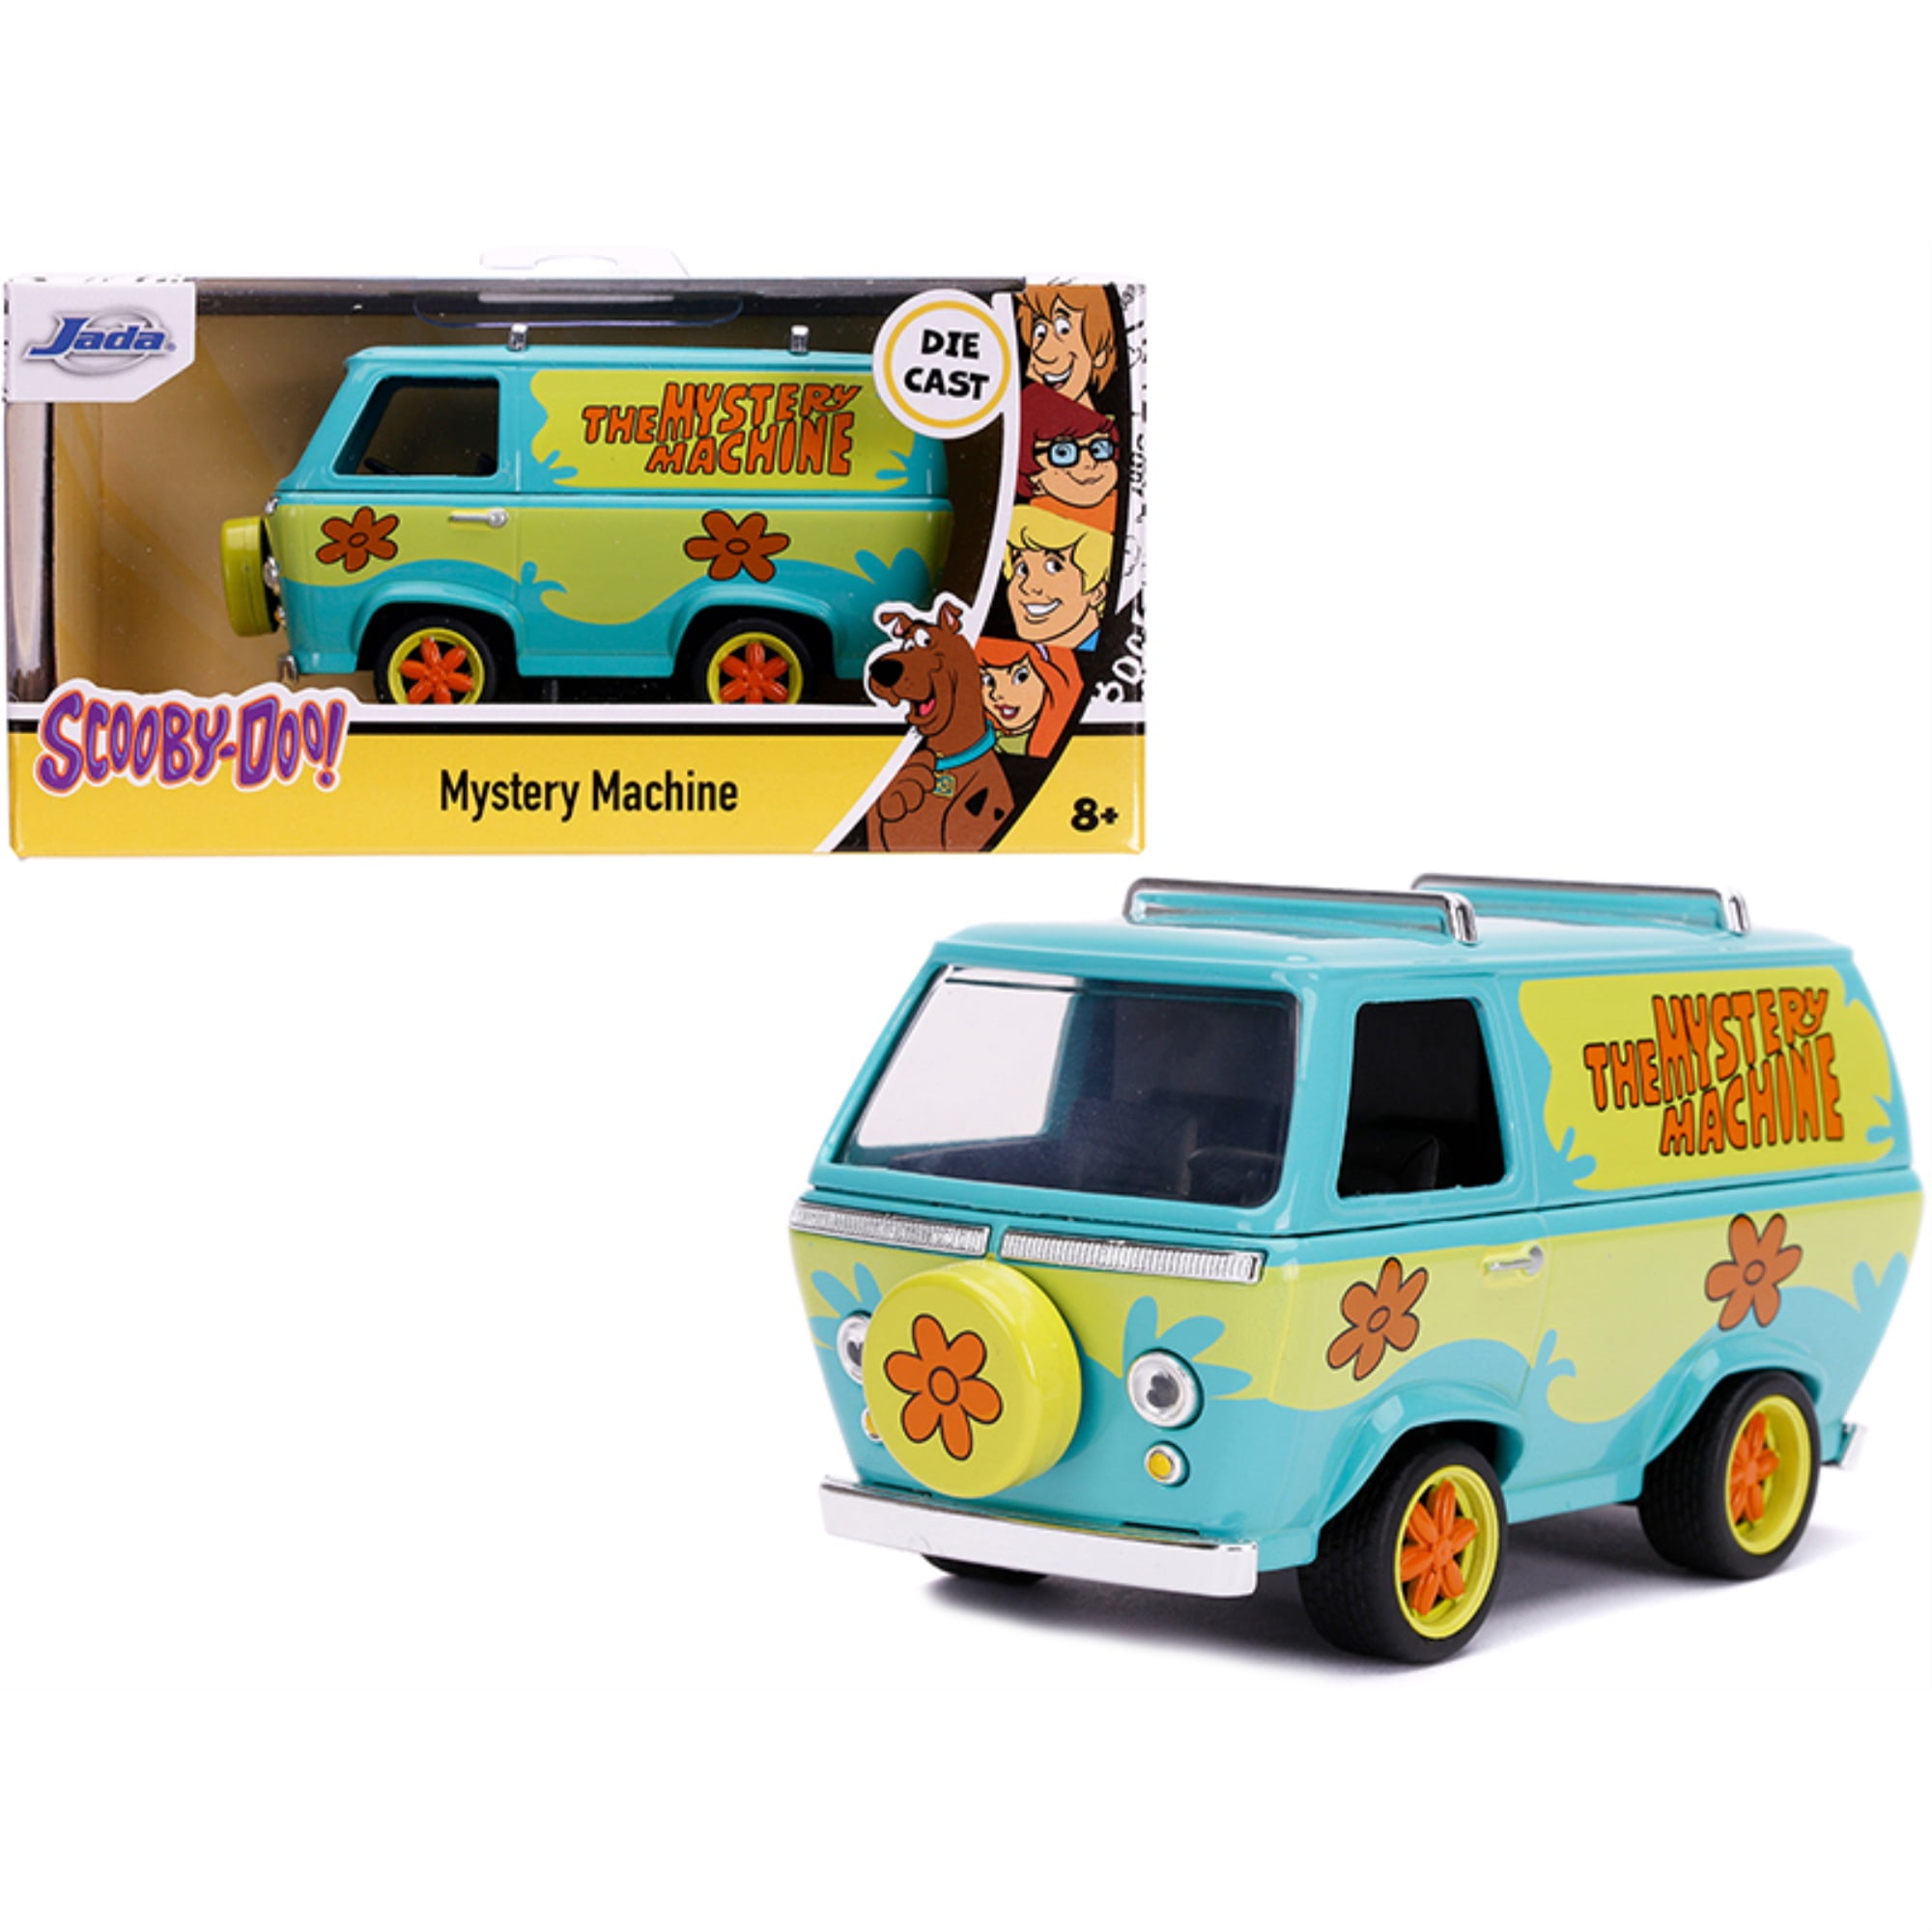 Scooby Doo Mystery Machine Toys | lupon.gov.ph